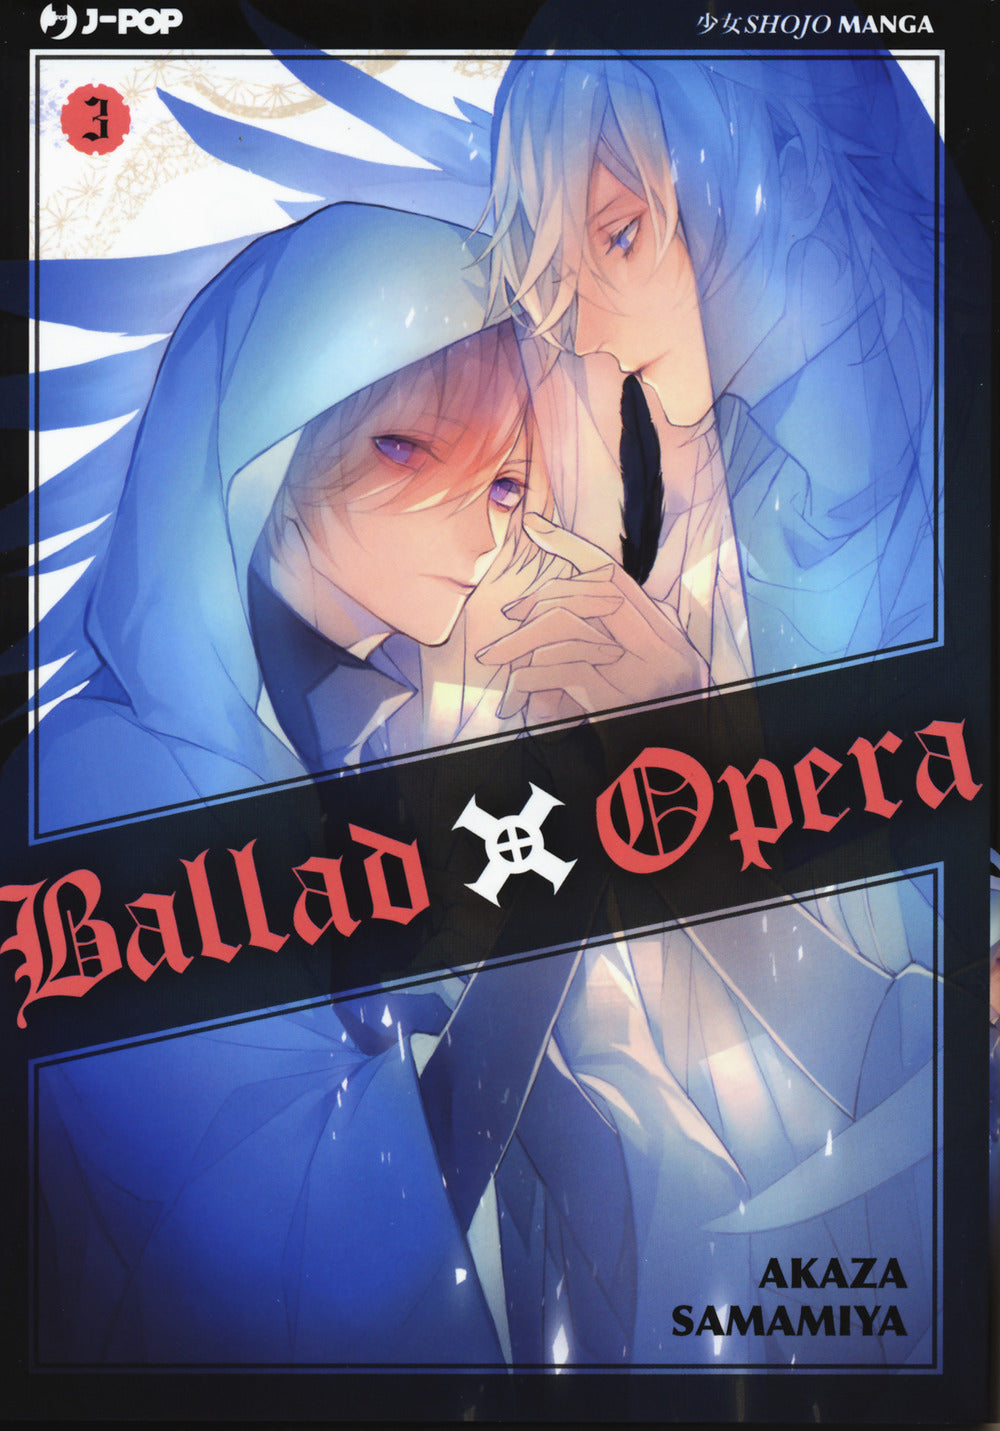 Ballad X Opera. Vol. 3.